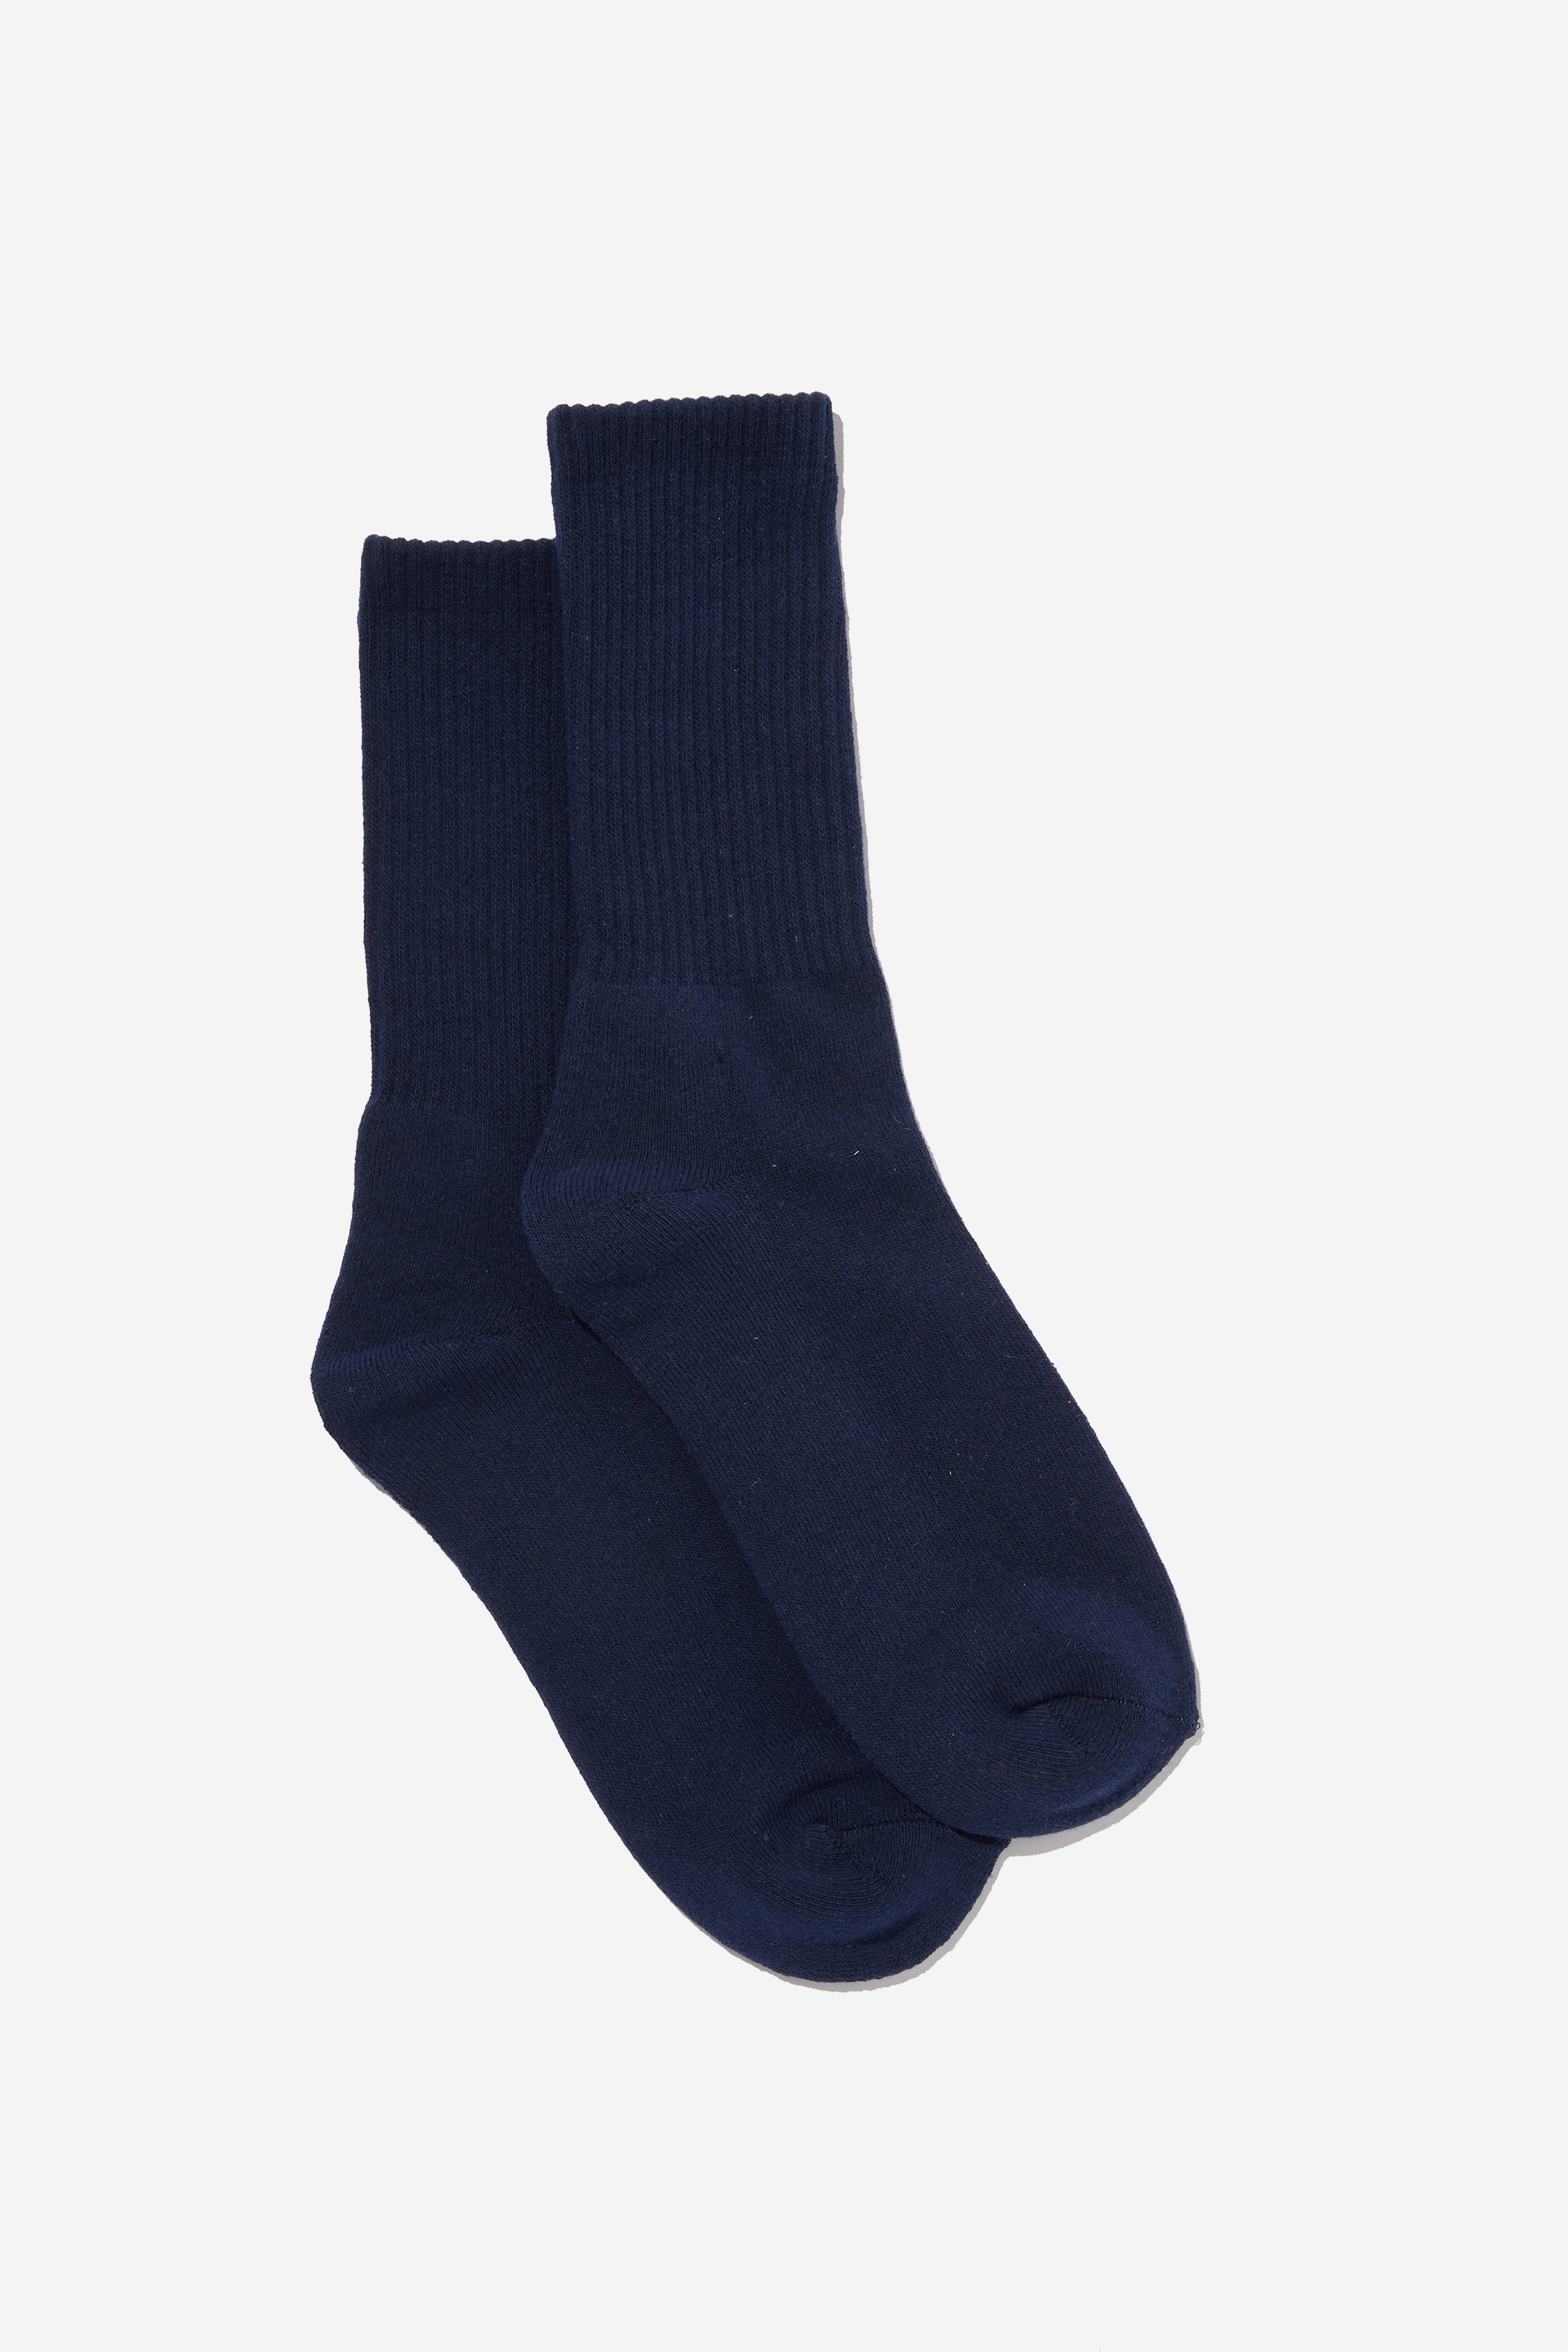 Cotton On Men - Essential Sock - Navy solid